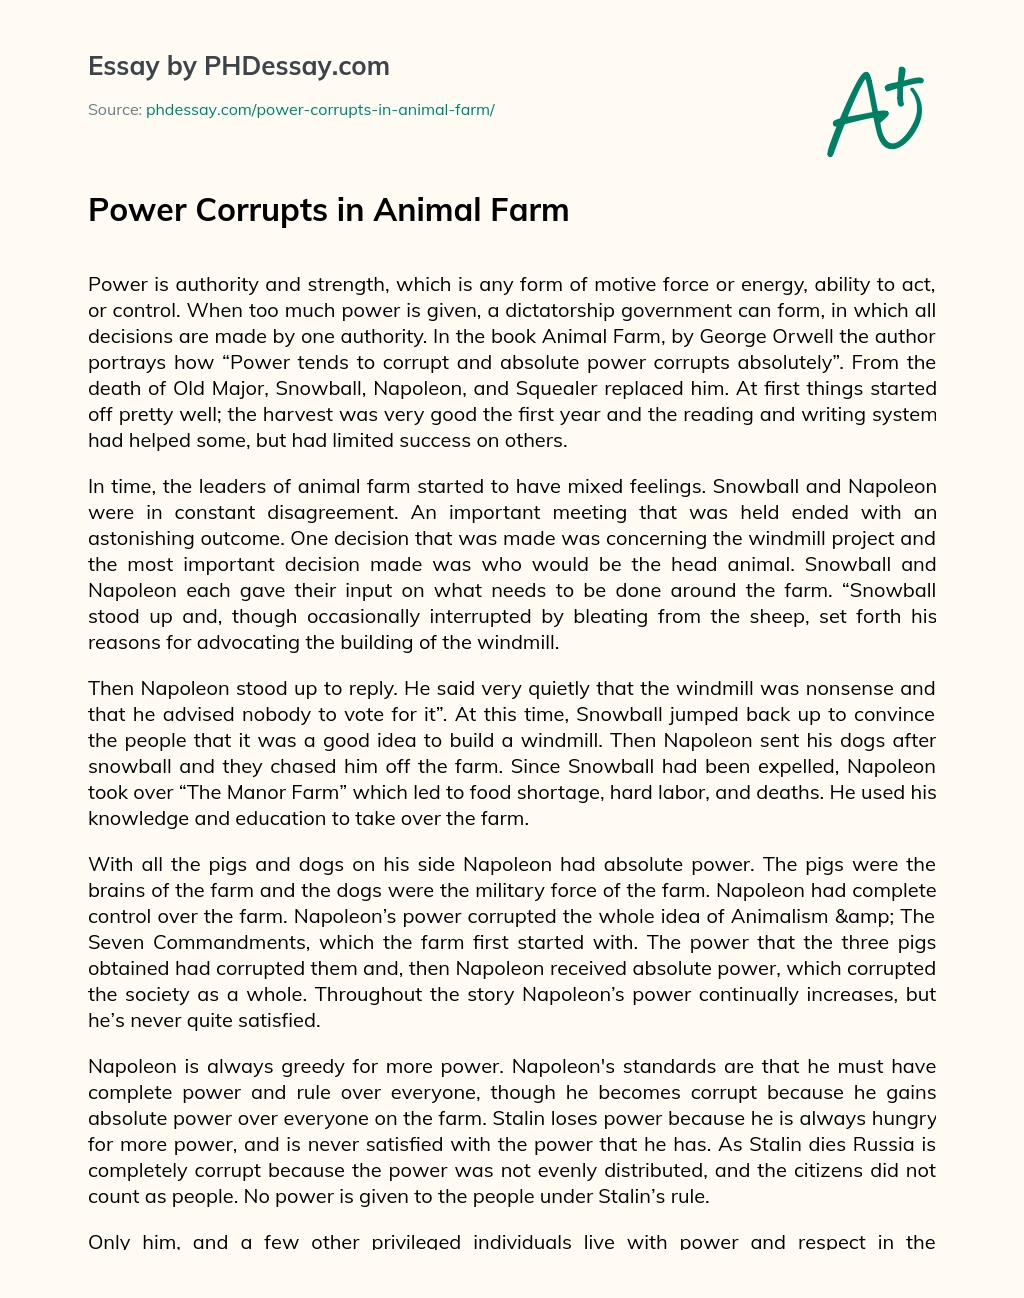 Power Corrupts in Animal Farm essay